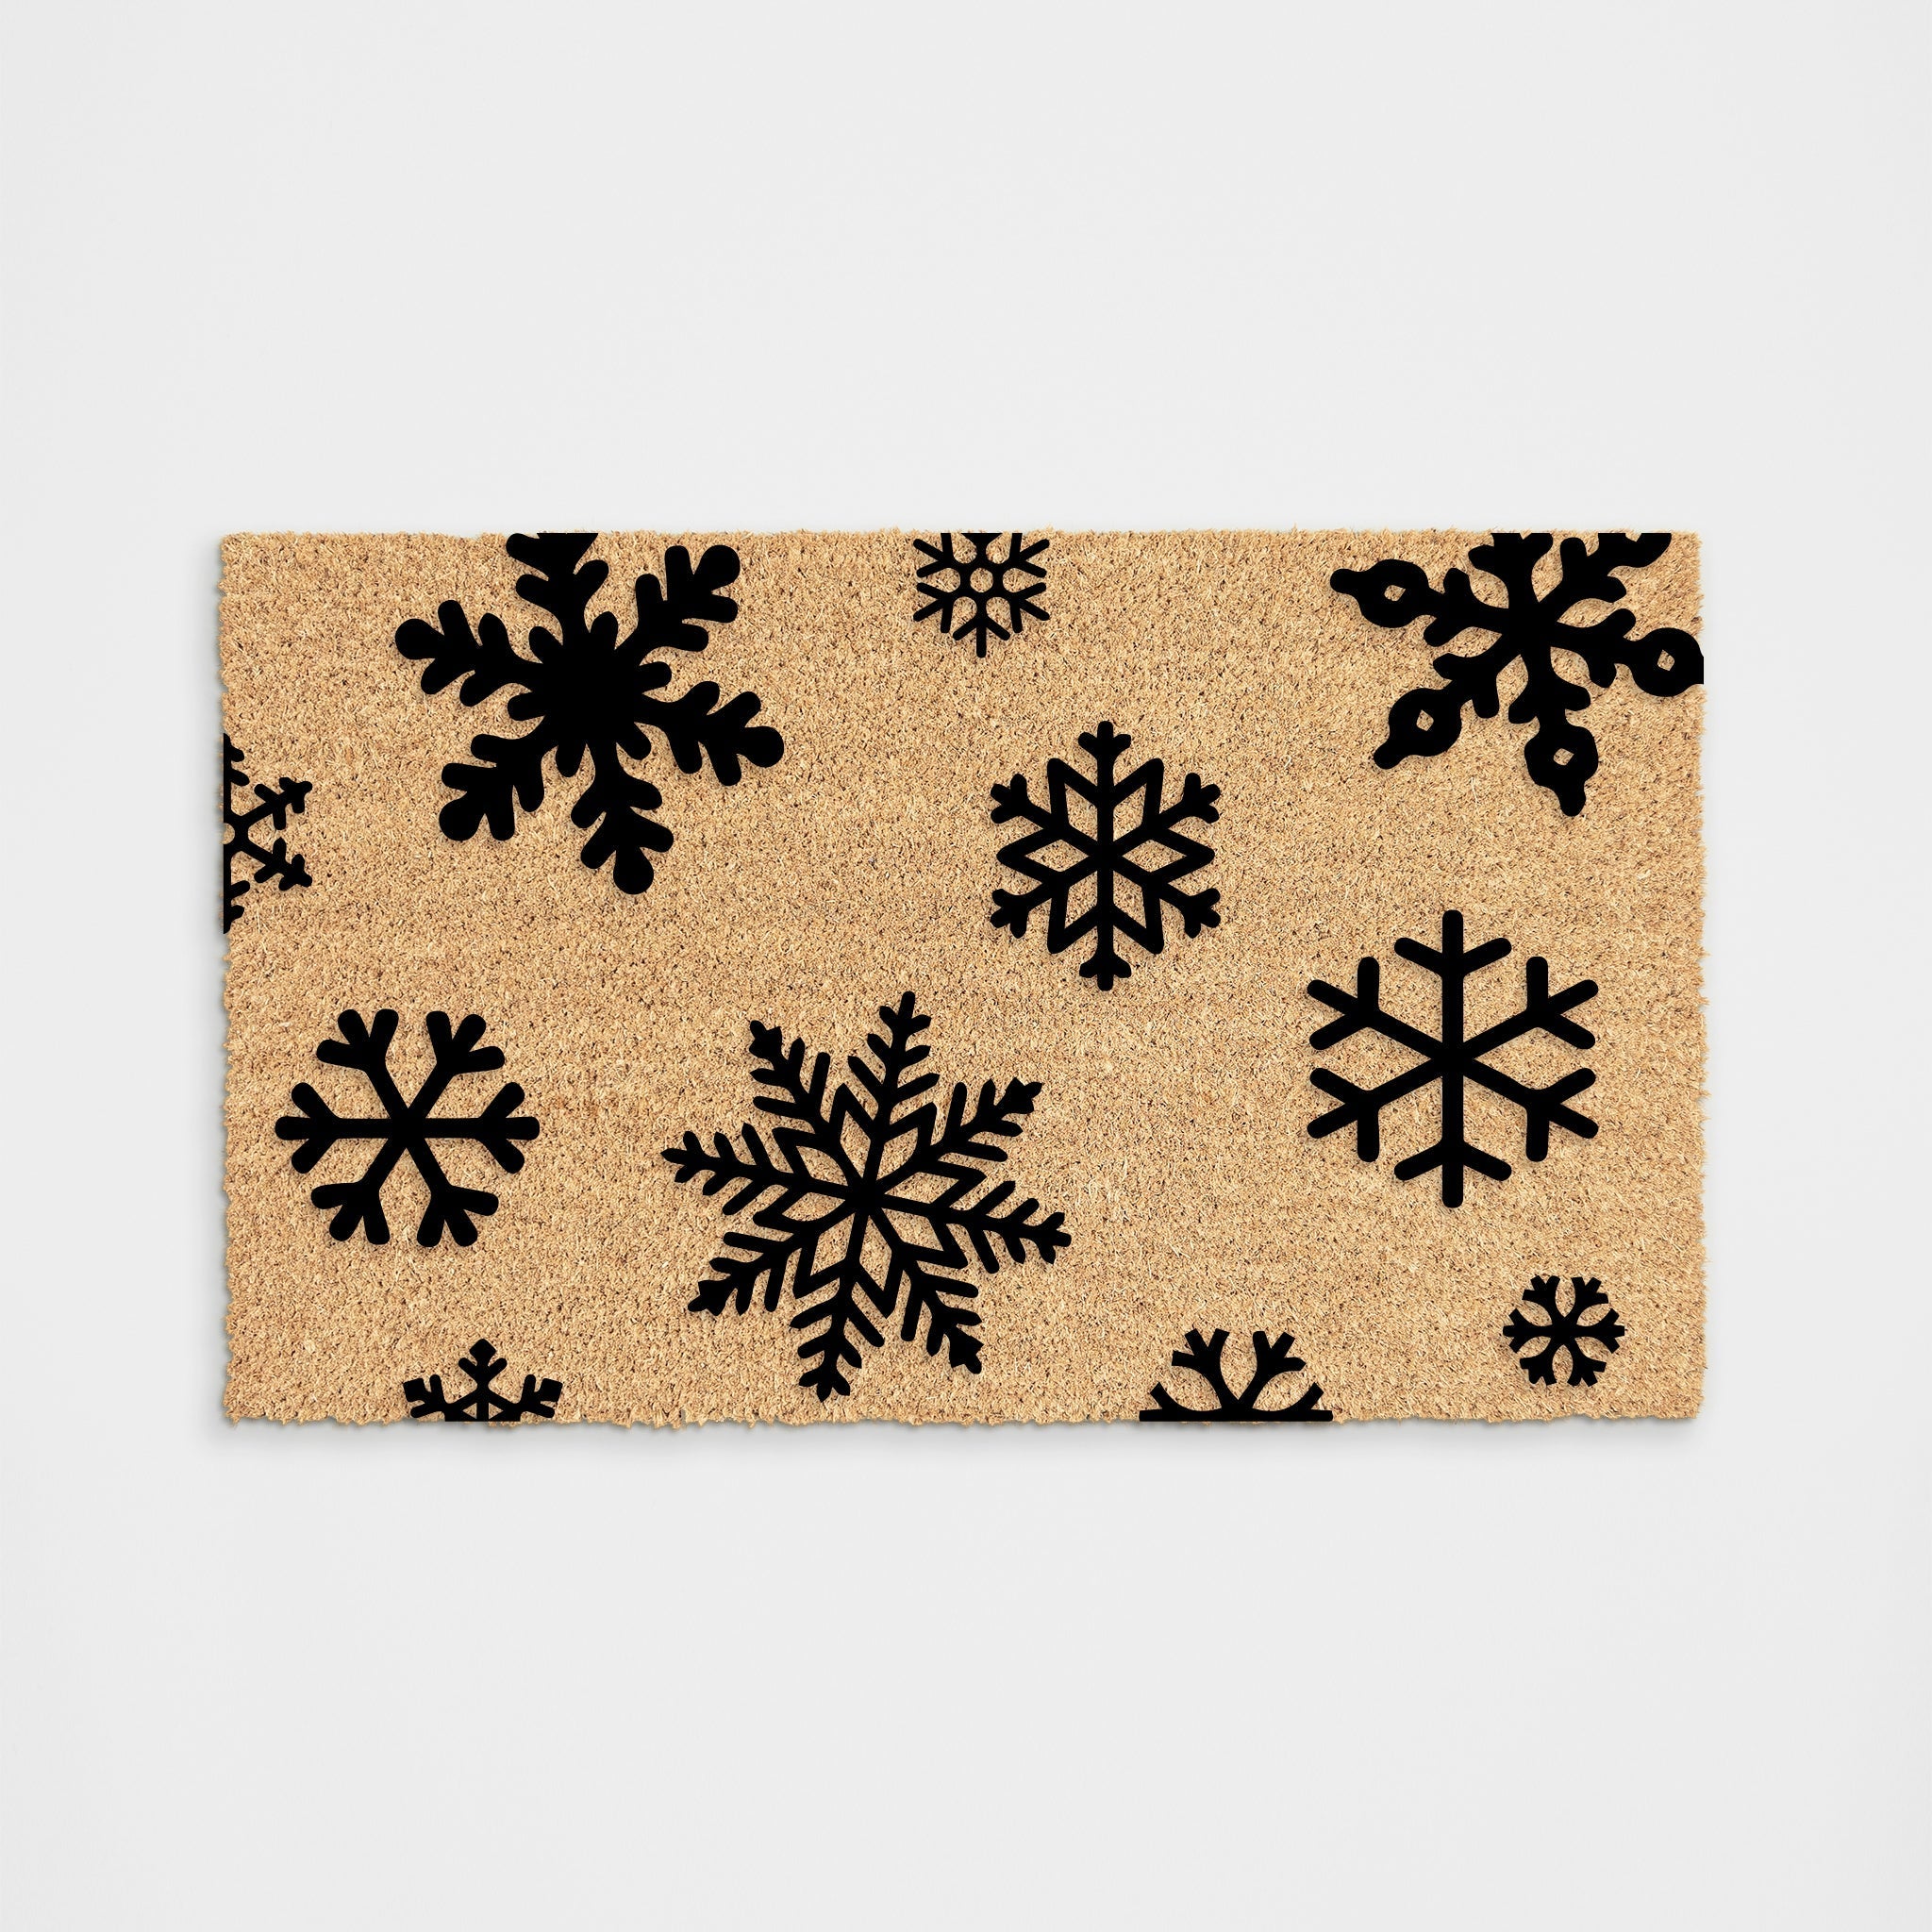 Matterly®️Holiday Snowflake Low Profile Doormat